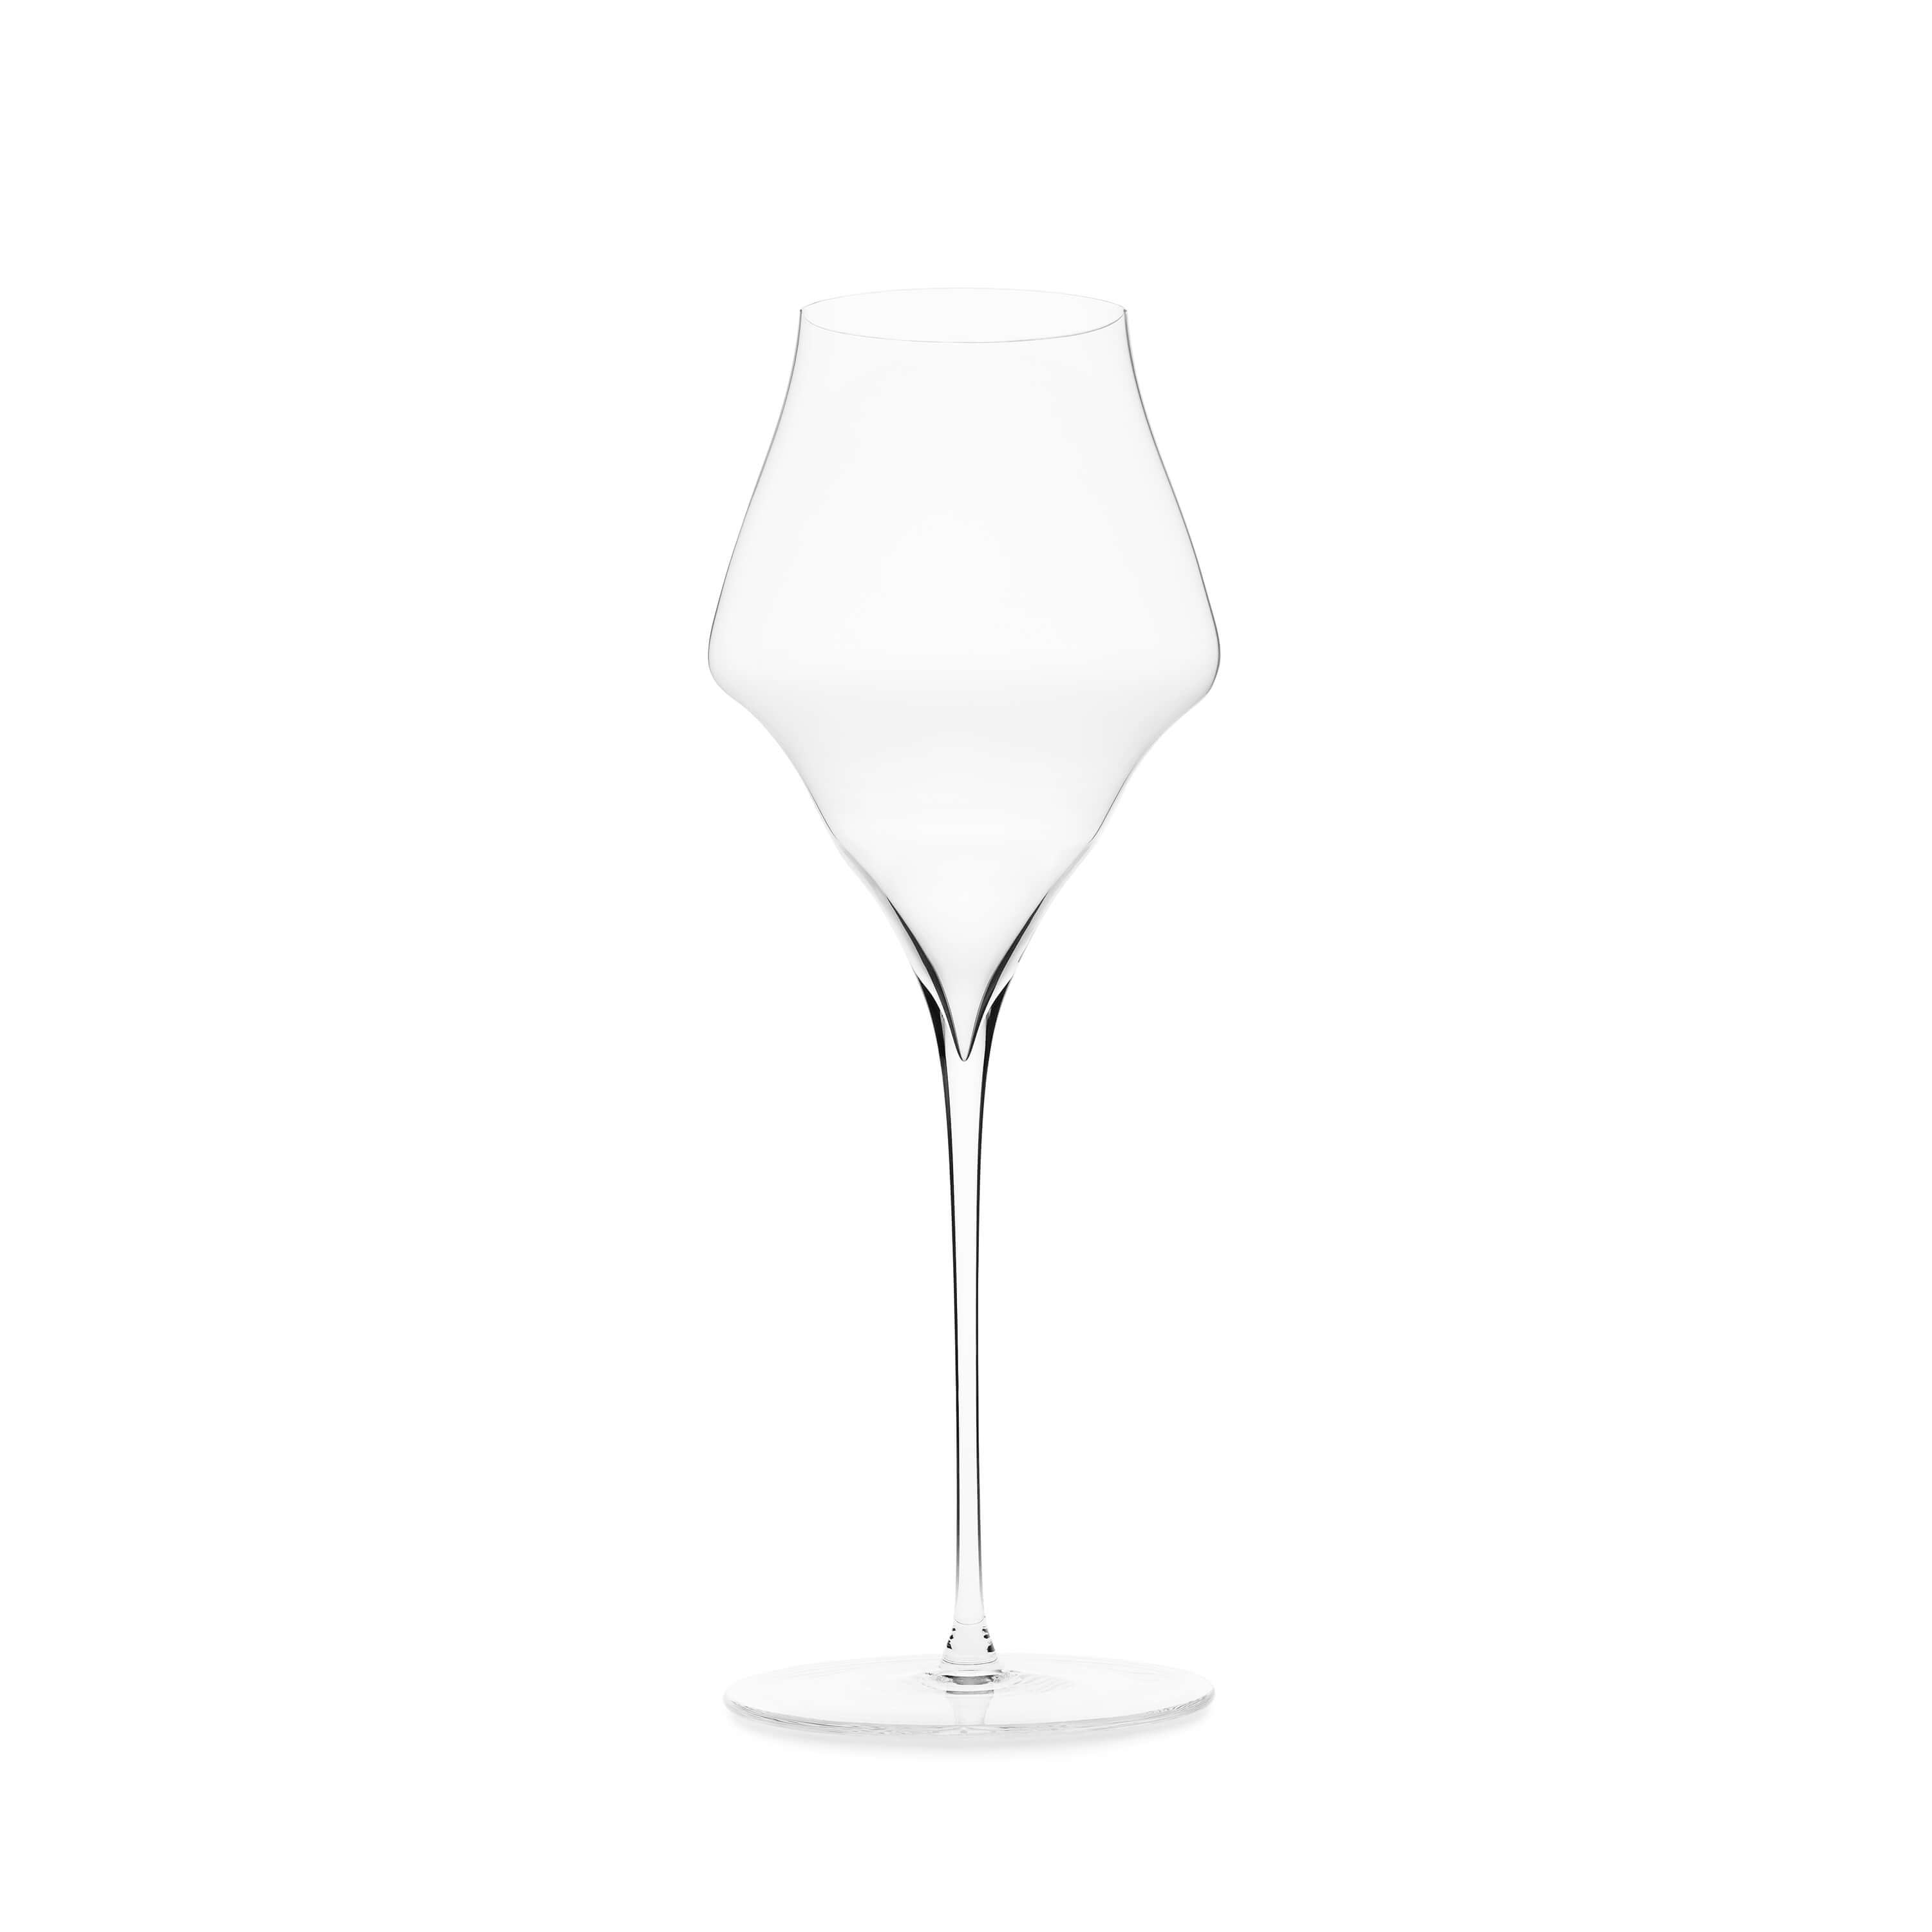 JOSEPHINE No 4 by Josephinenhütte – Champagne glass #Set_Single Glass